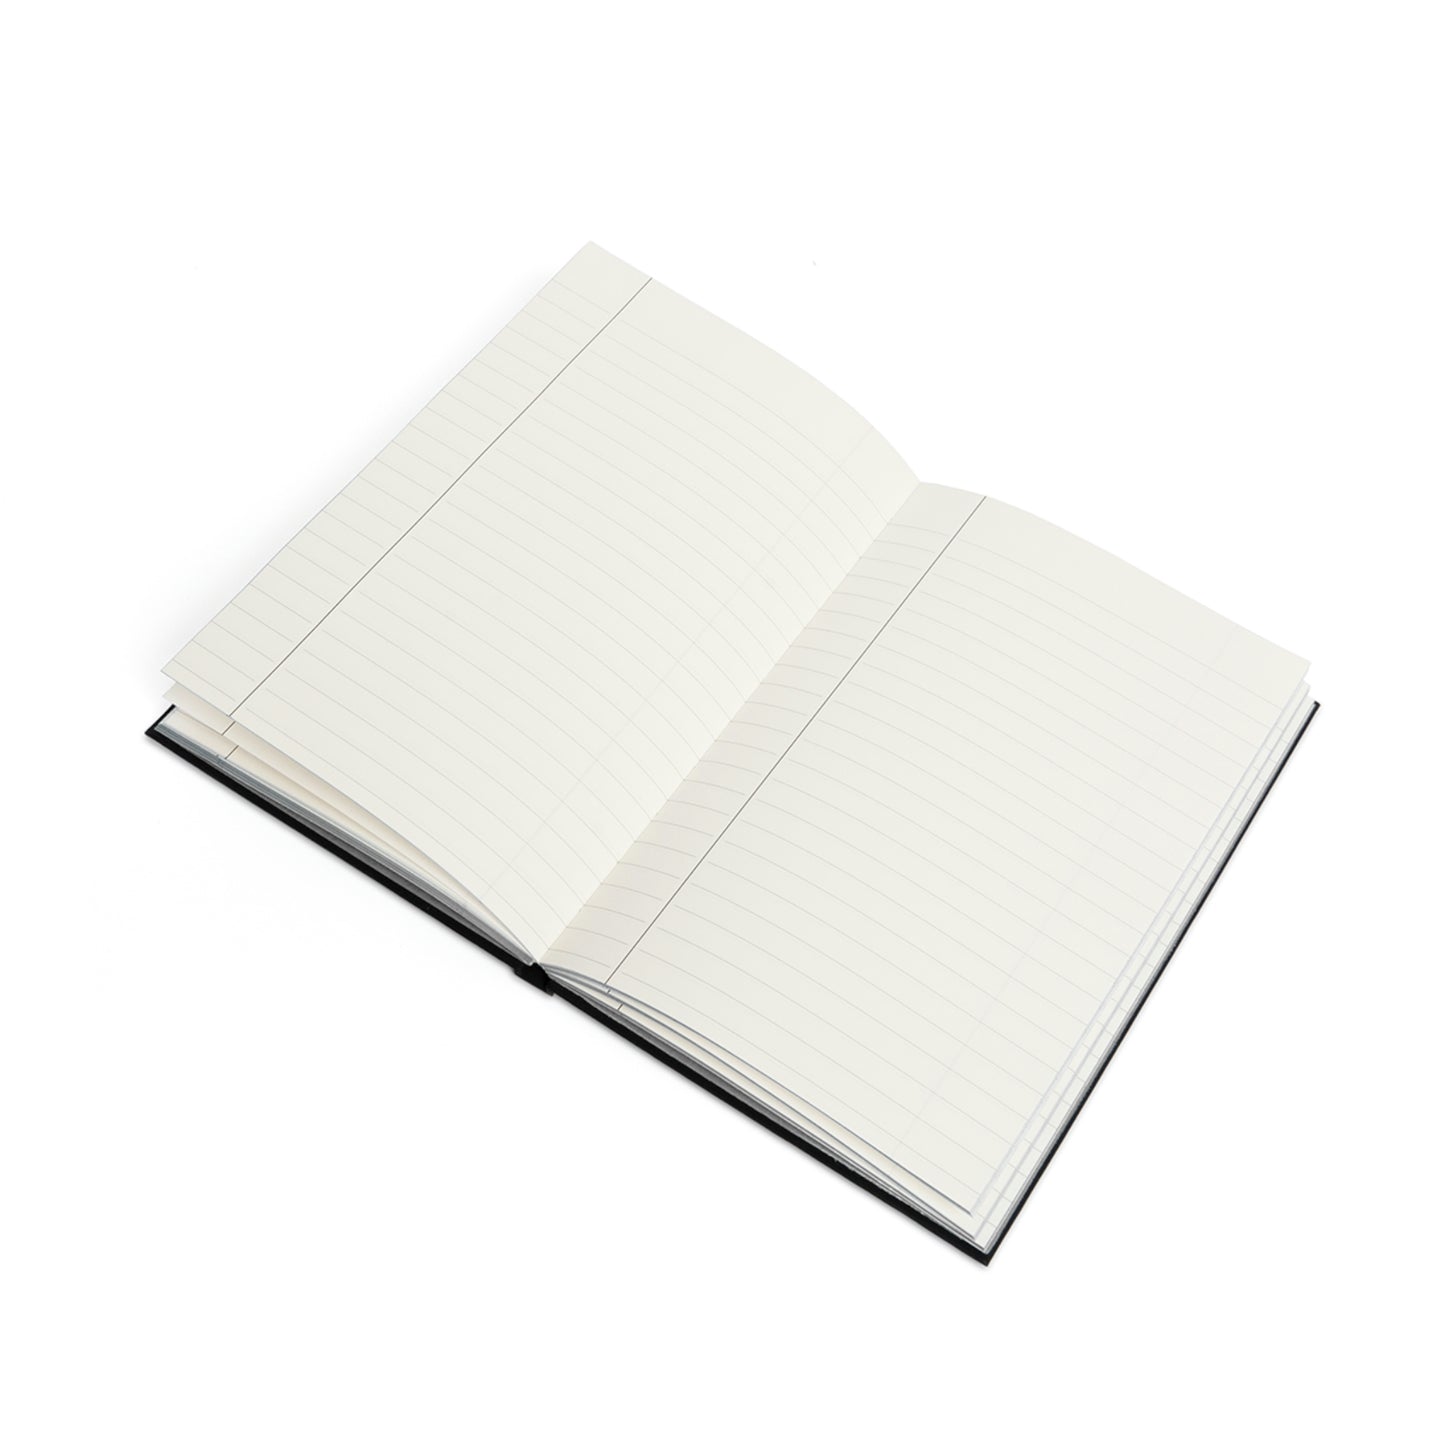 DFW Journal/Notebook - Ruled